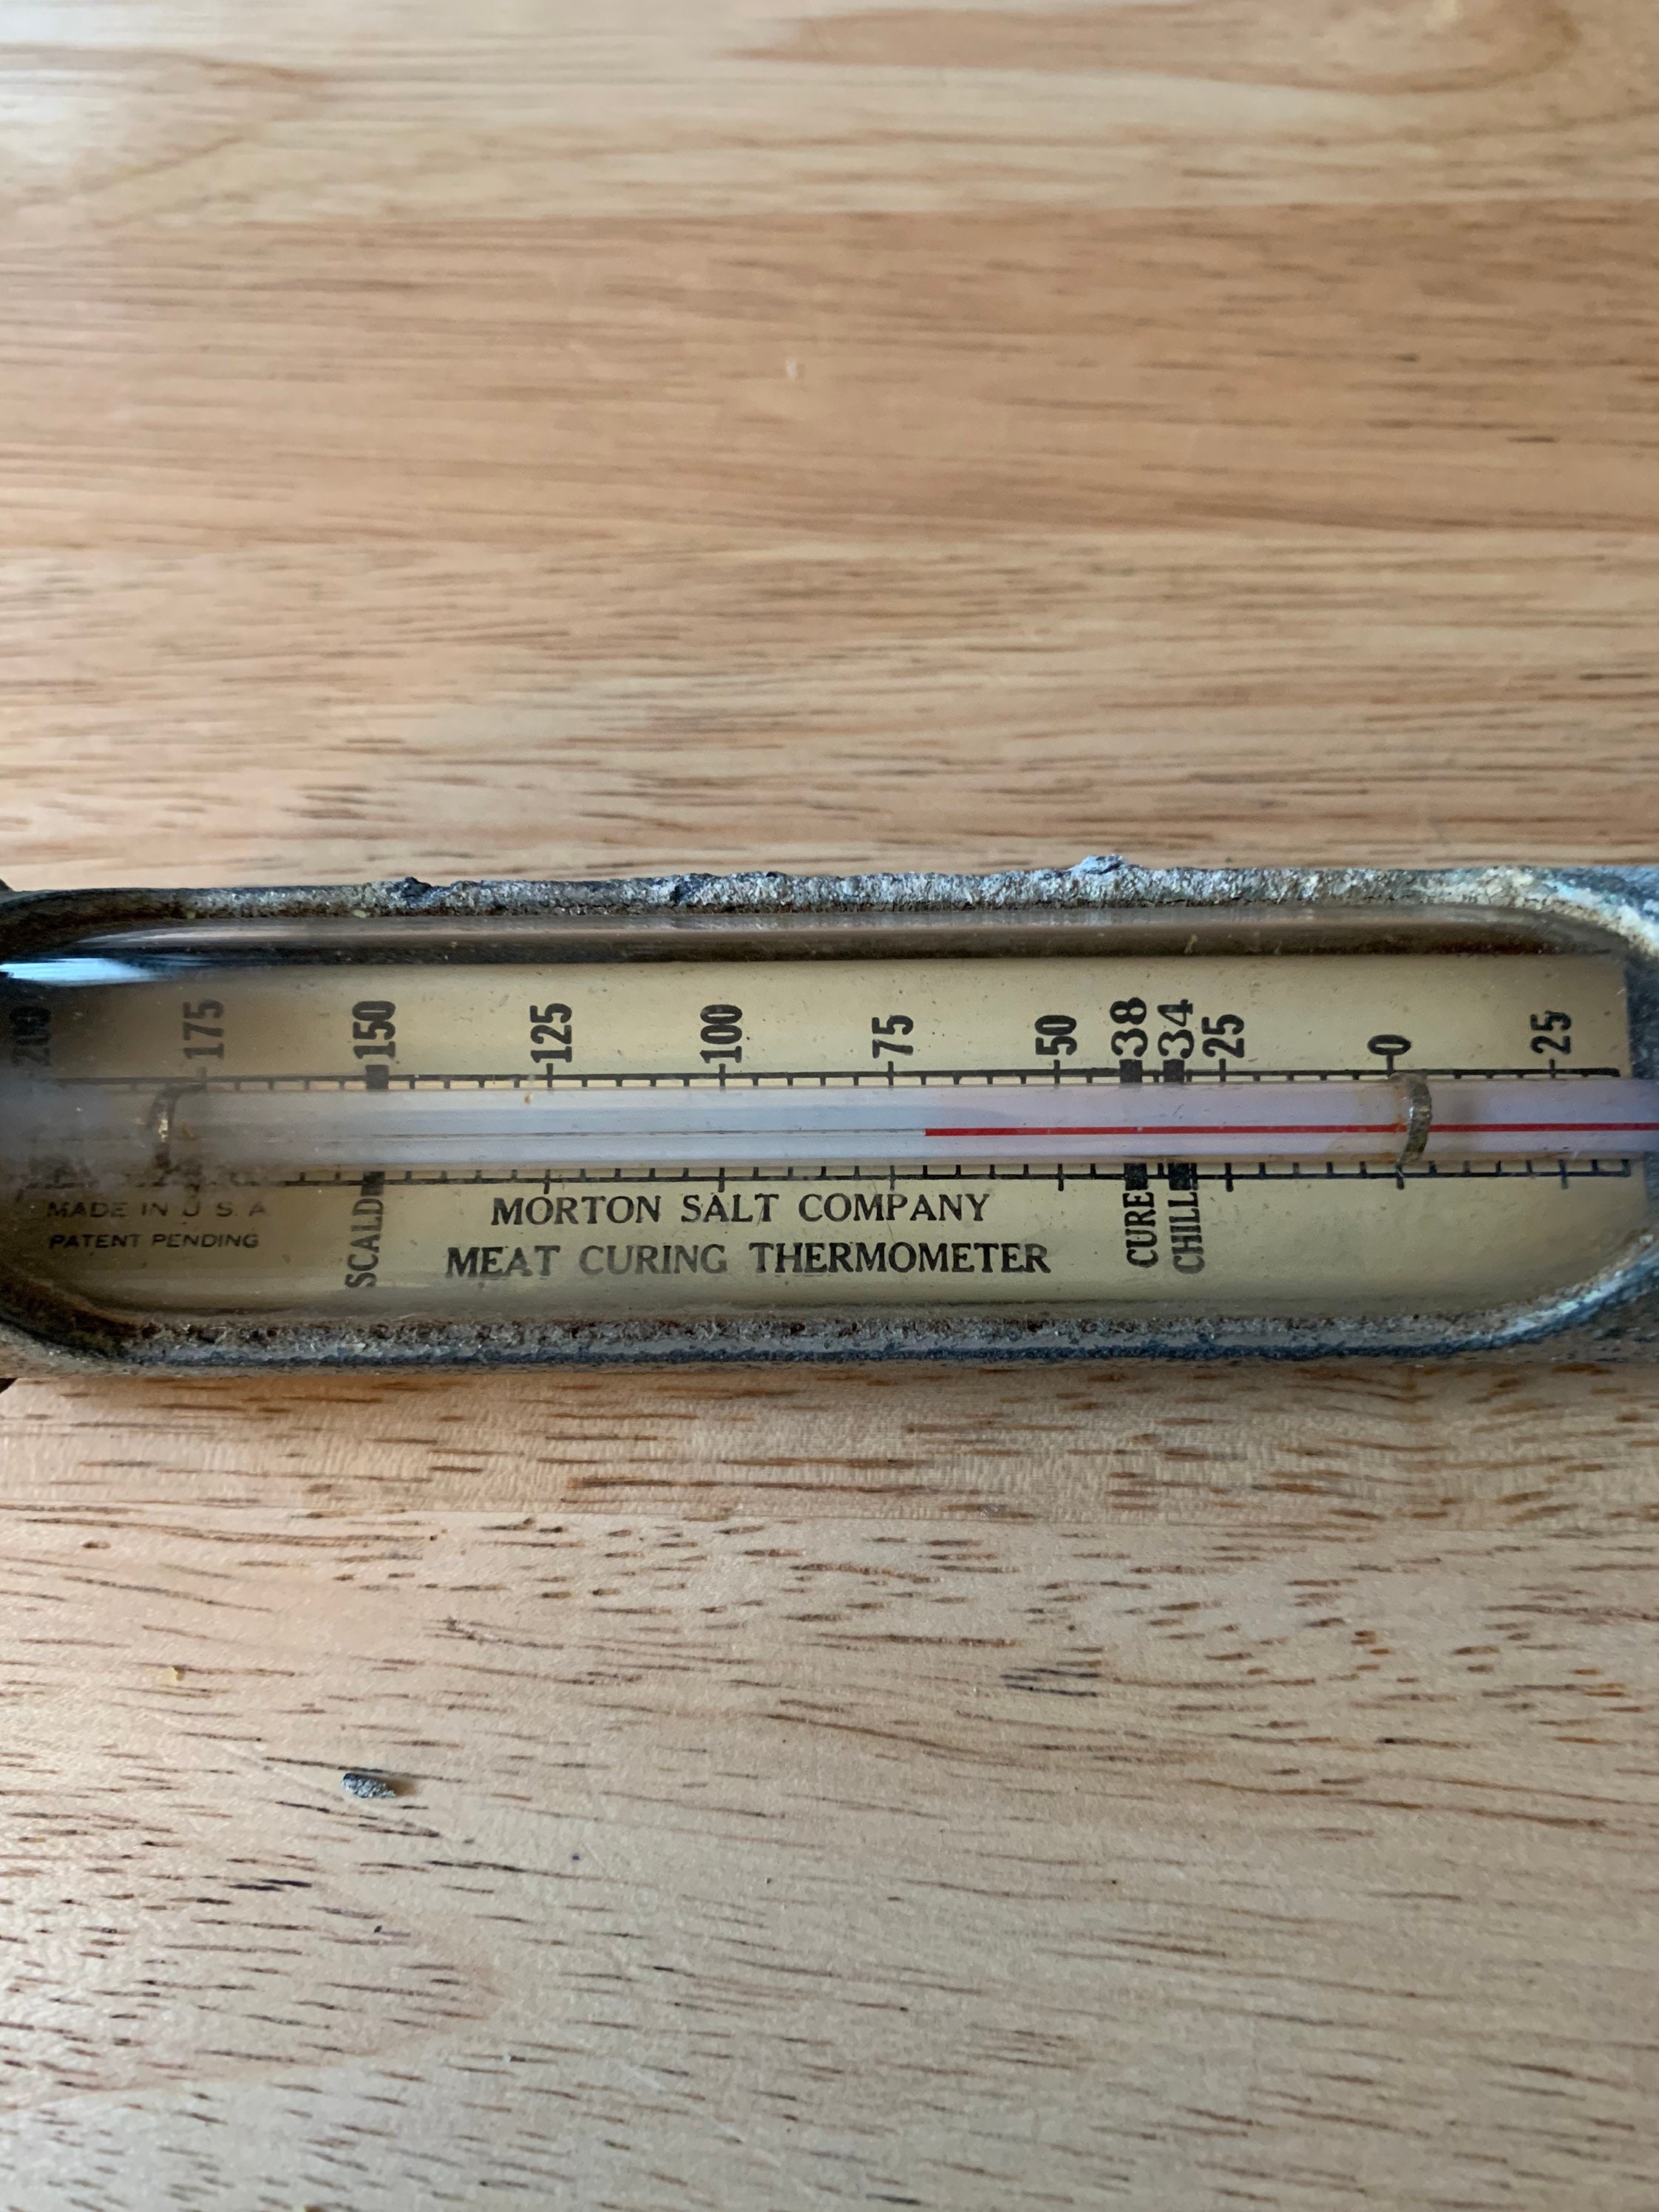 Classic Instruments VT26GLF Vintage Water Temperature Gauge